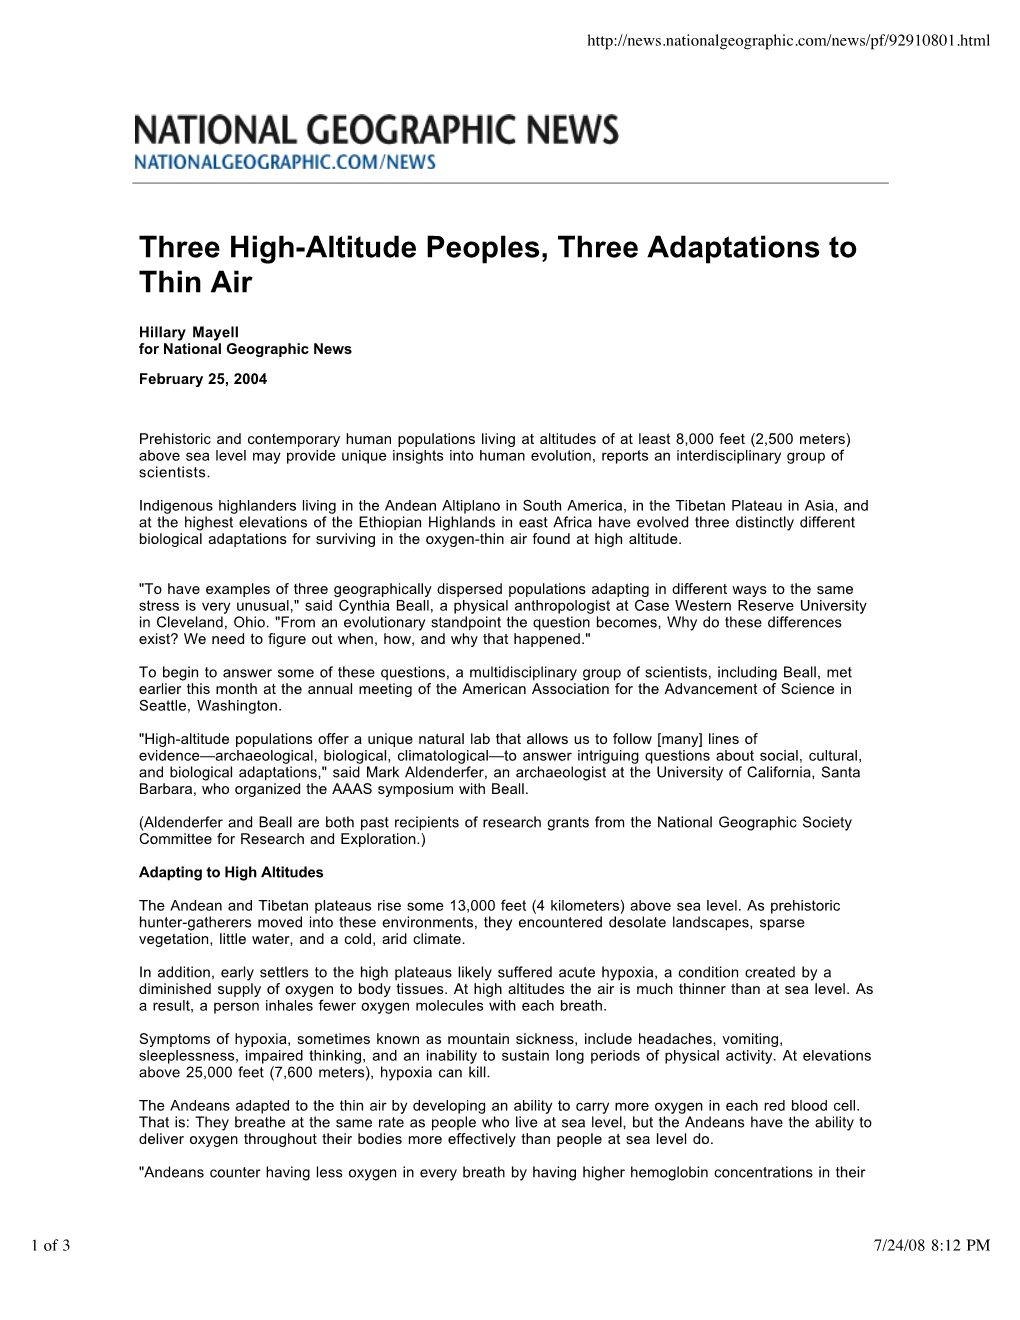 Three High-Altitude Peoples, Three Adaptations to Thin Air